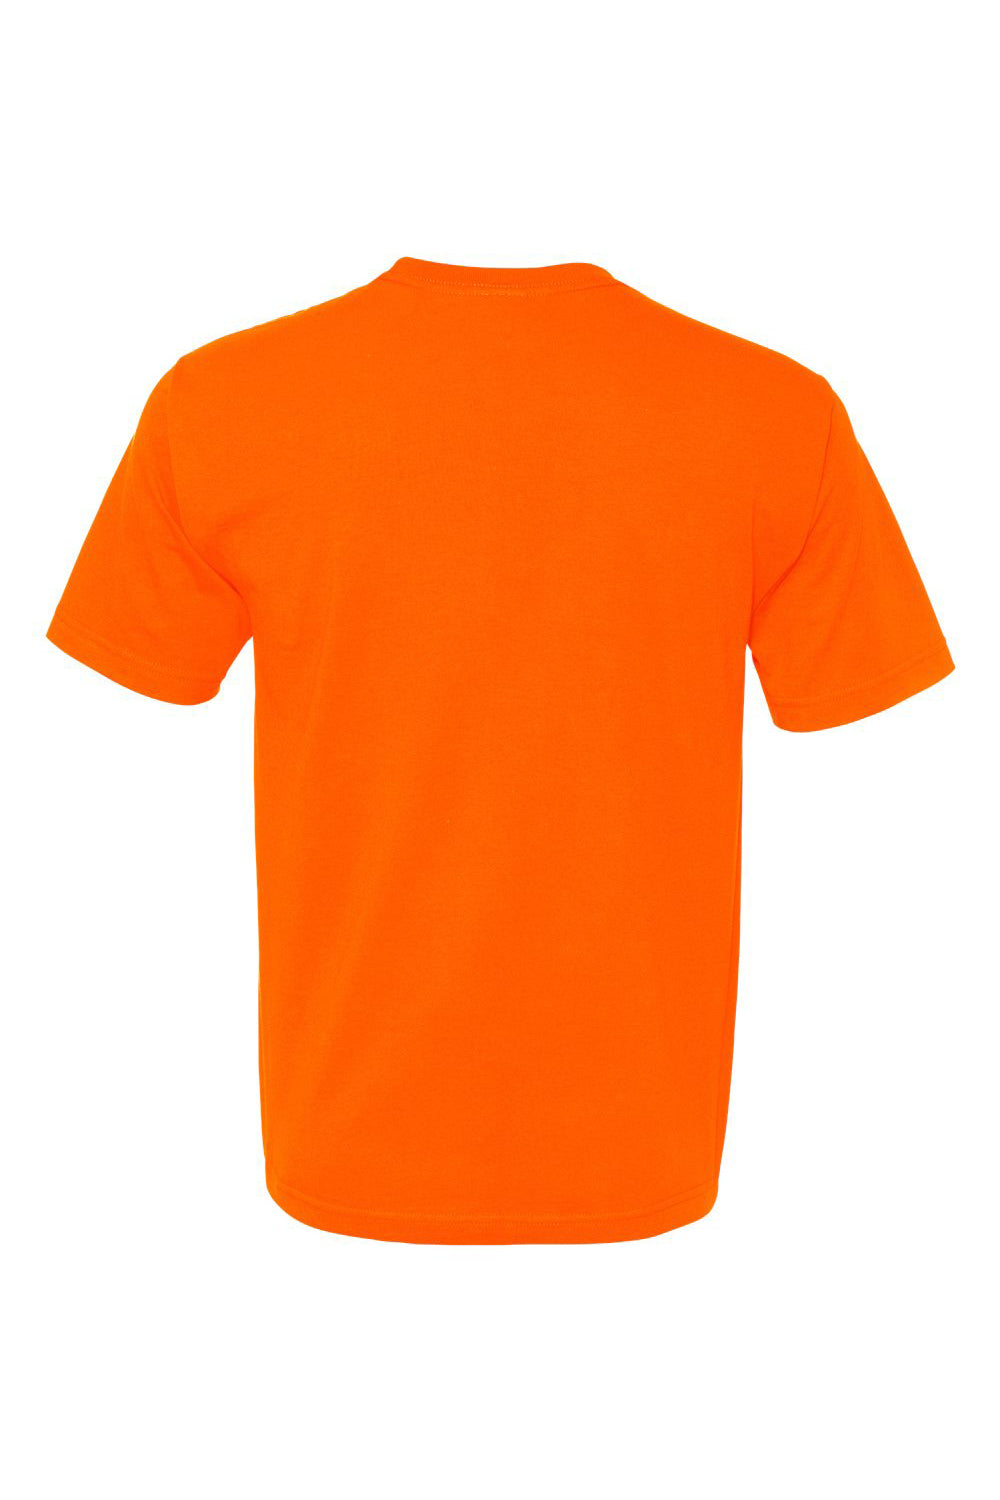 Bayside BA5040 Mens USA Made Short Sleeve Crewneck T-Shirt Bright Orange Flat Back